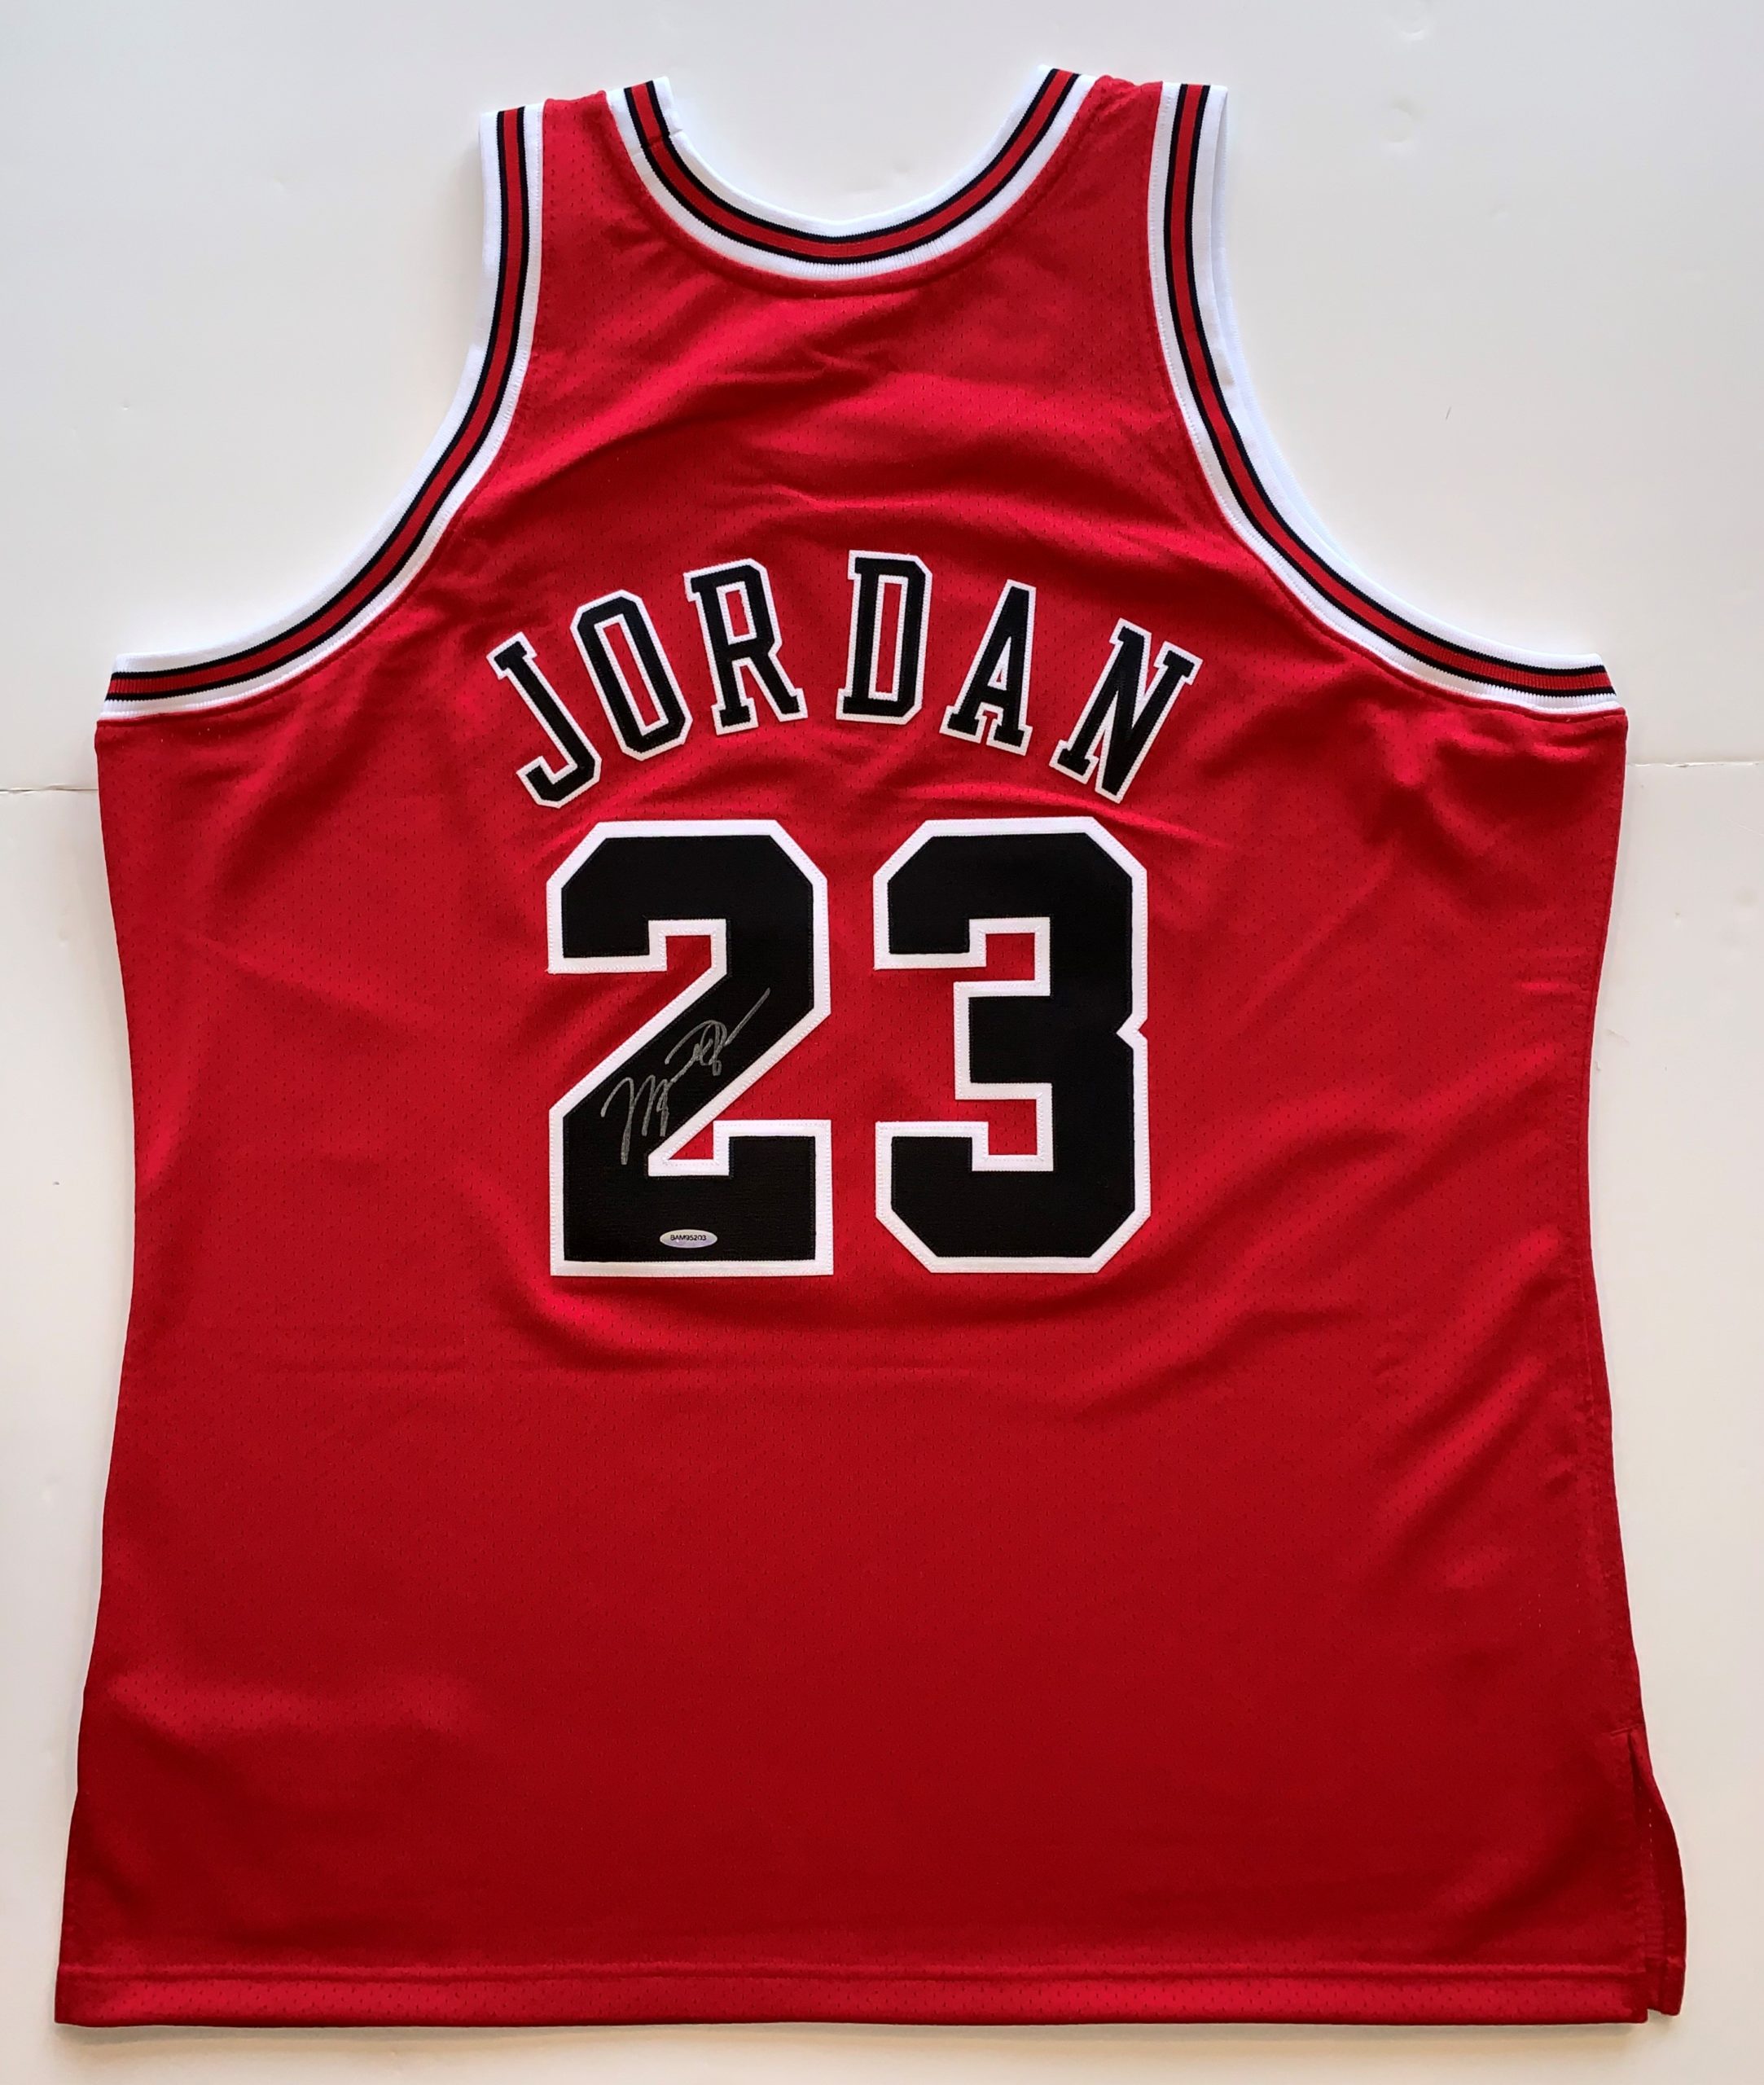 Michael Jordan Autographed Jersey for $8,000?